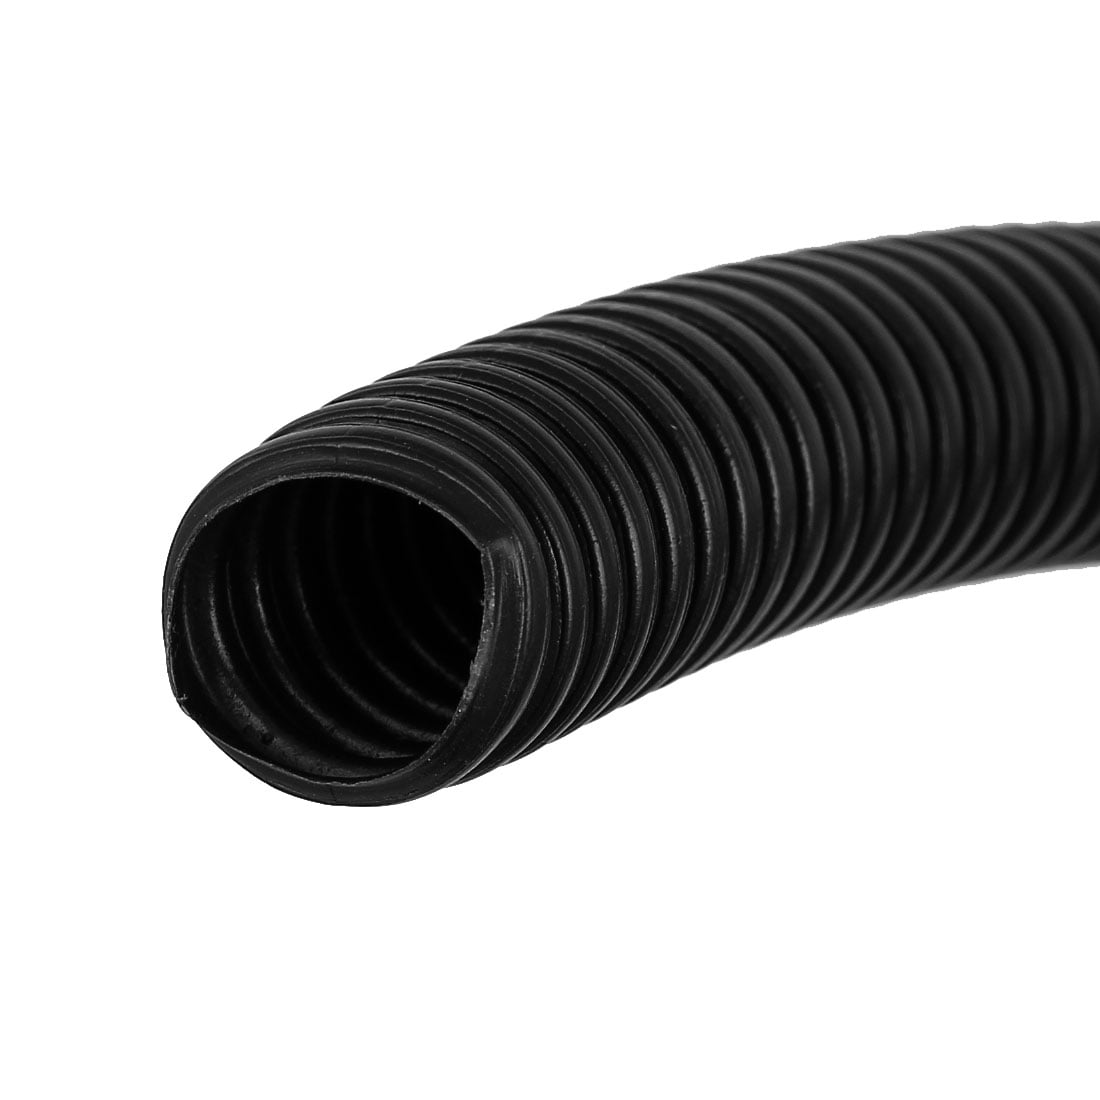 IIVVERR Black Plastic 25mm x 20mm Flexible Corrugated Conduit Pipe Hose  Tube 5M Long (Tubo de manguera de tubo de conducto corrugado flexible de